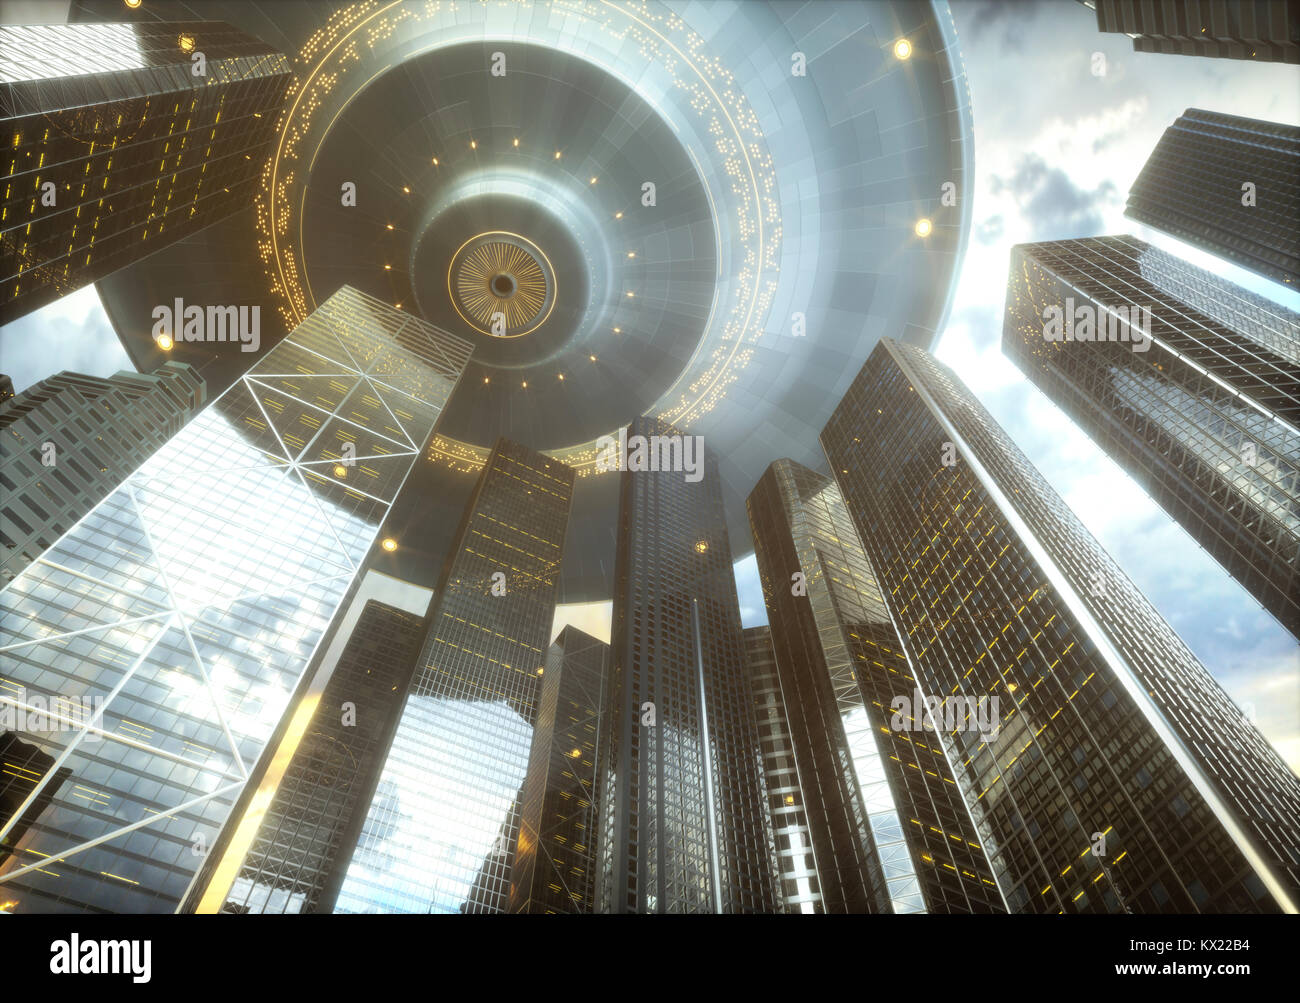 Space craft over futuristic city, illustration. Stock Photo